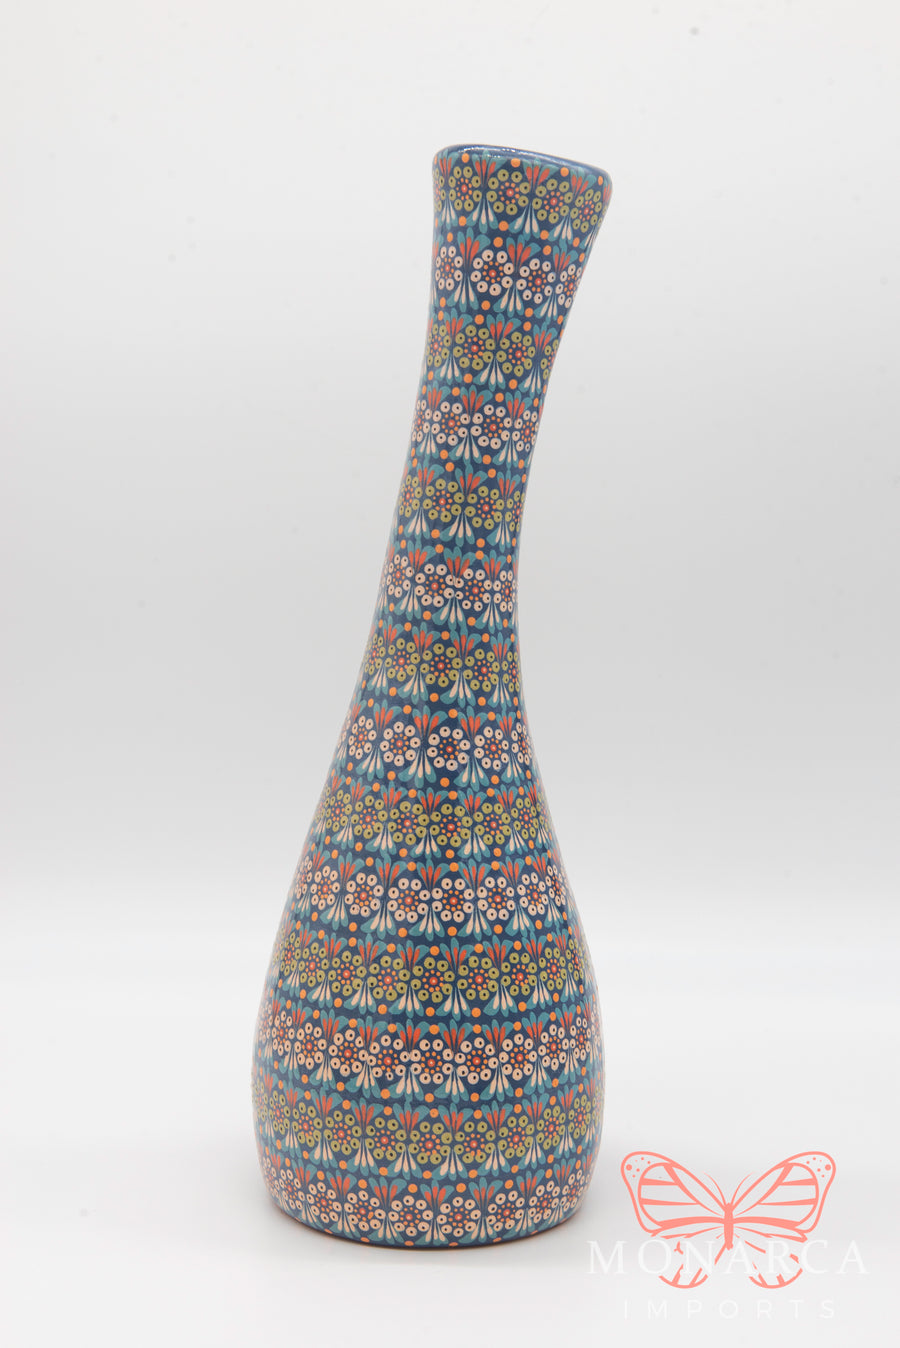 Long Neck Clay Vase - Handmade - High Detail Handpainted